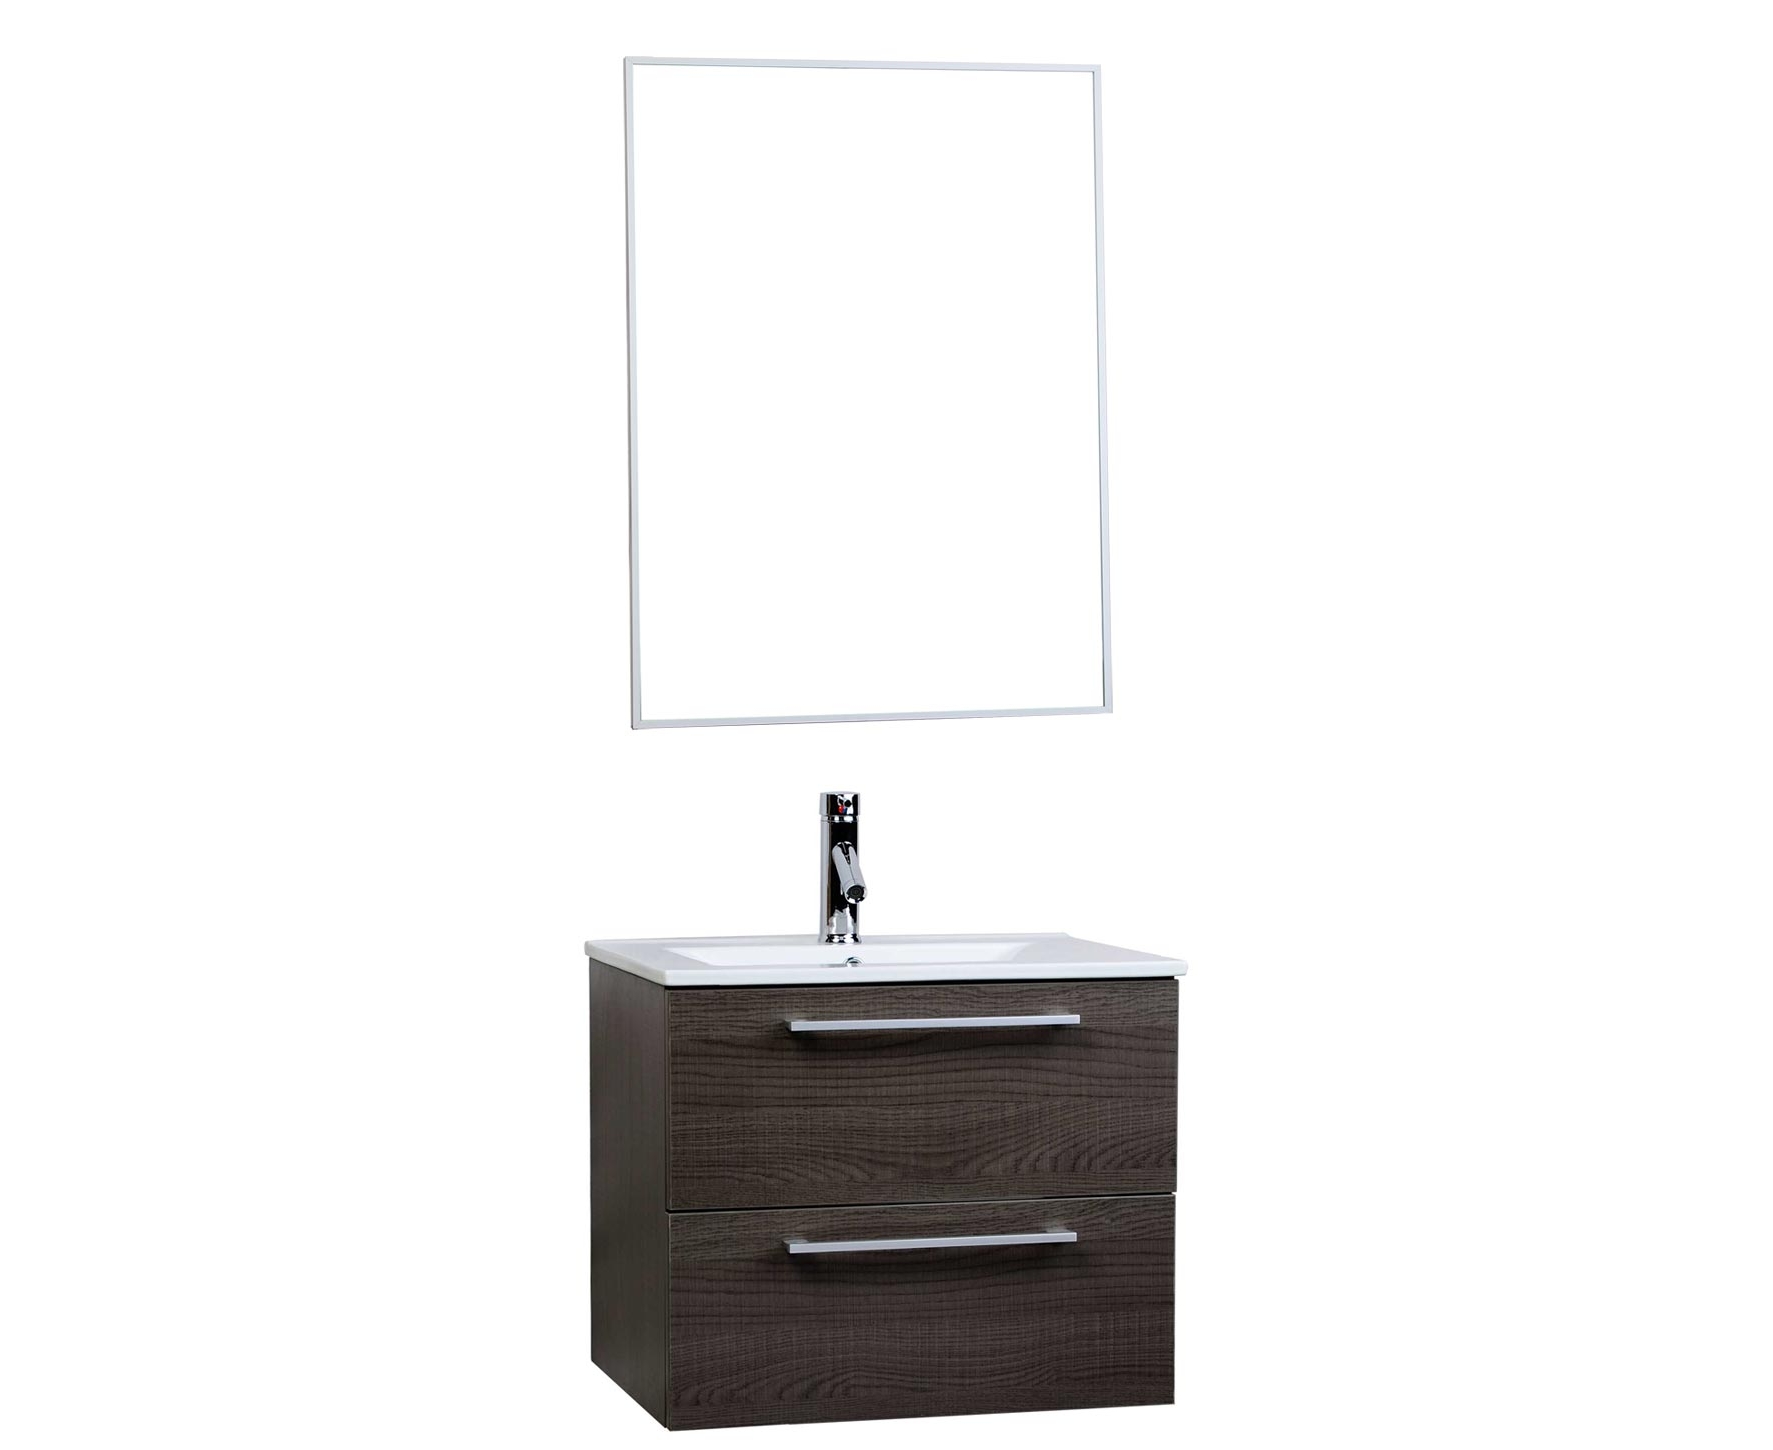 Caen 23 5 Single Bathroom Vanity Set, Single Bathroom Vanity Set With Mirror